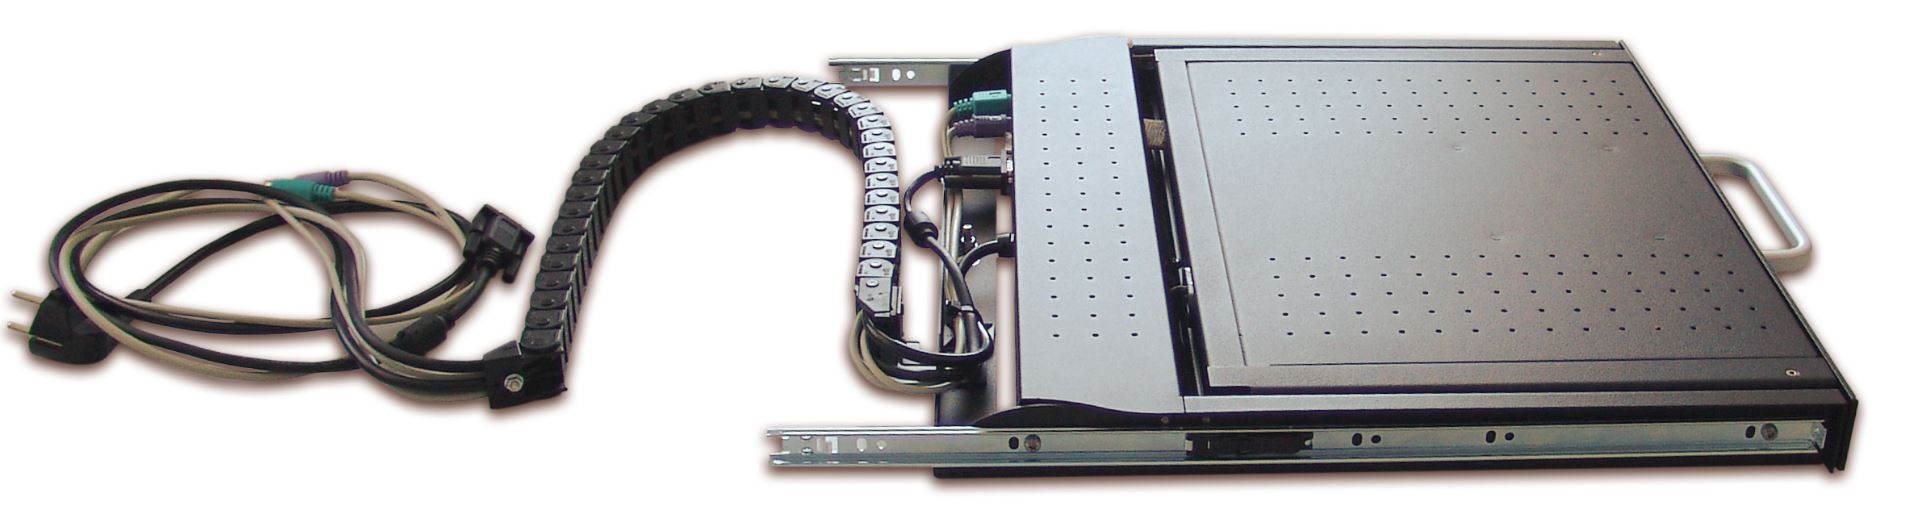 RM 17 Comfort Widescreen FullHD - Fokus Technologies Einbaukonsole Kabel